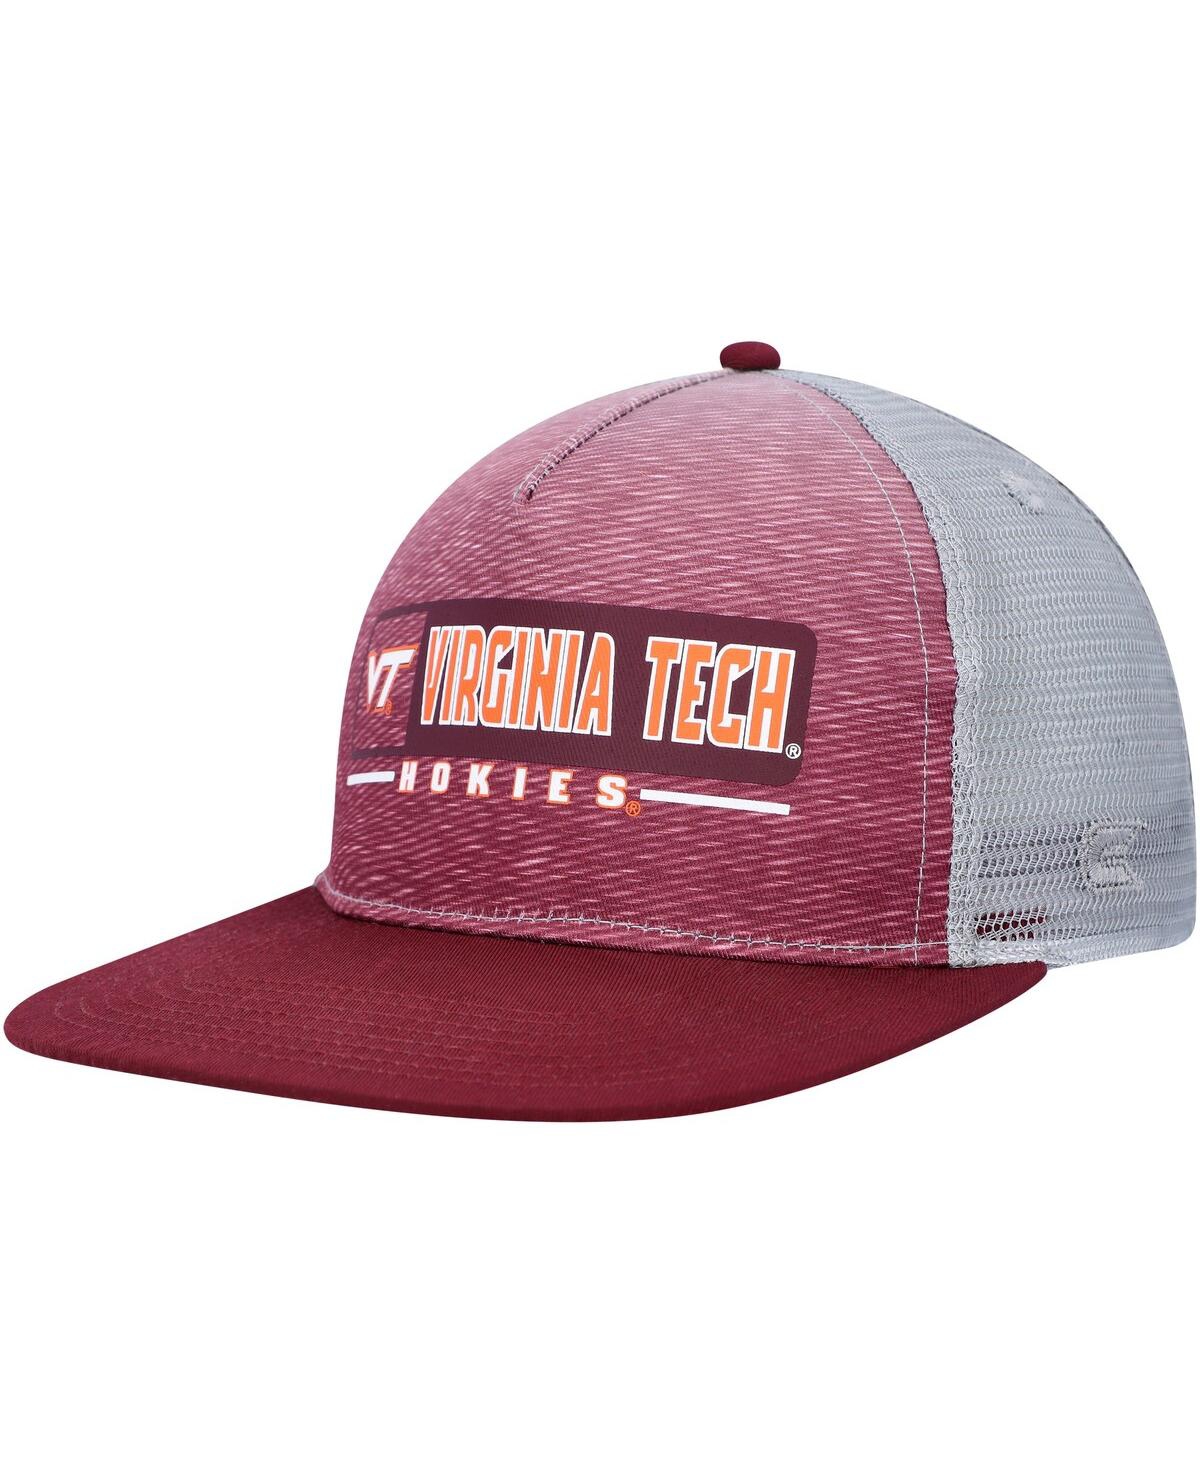 Men's Colosseum Maroon, Gray Virginia Tech Hokies Snapback Hat - Maroon, Gray